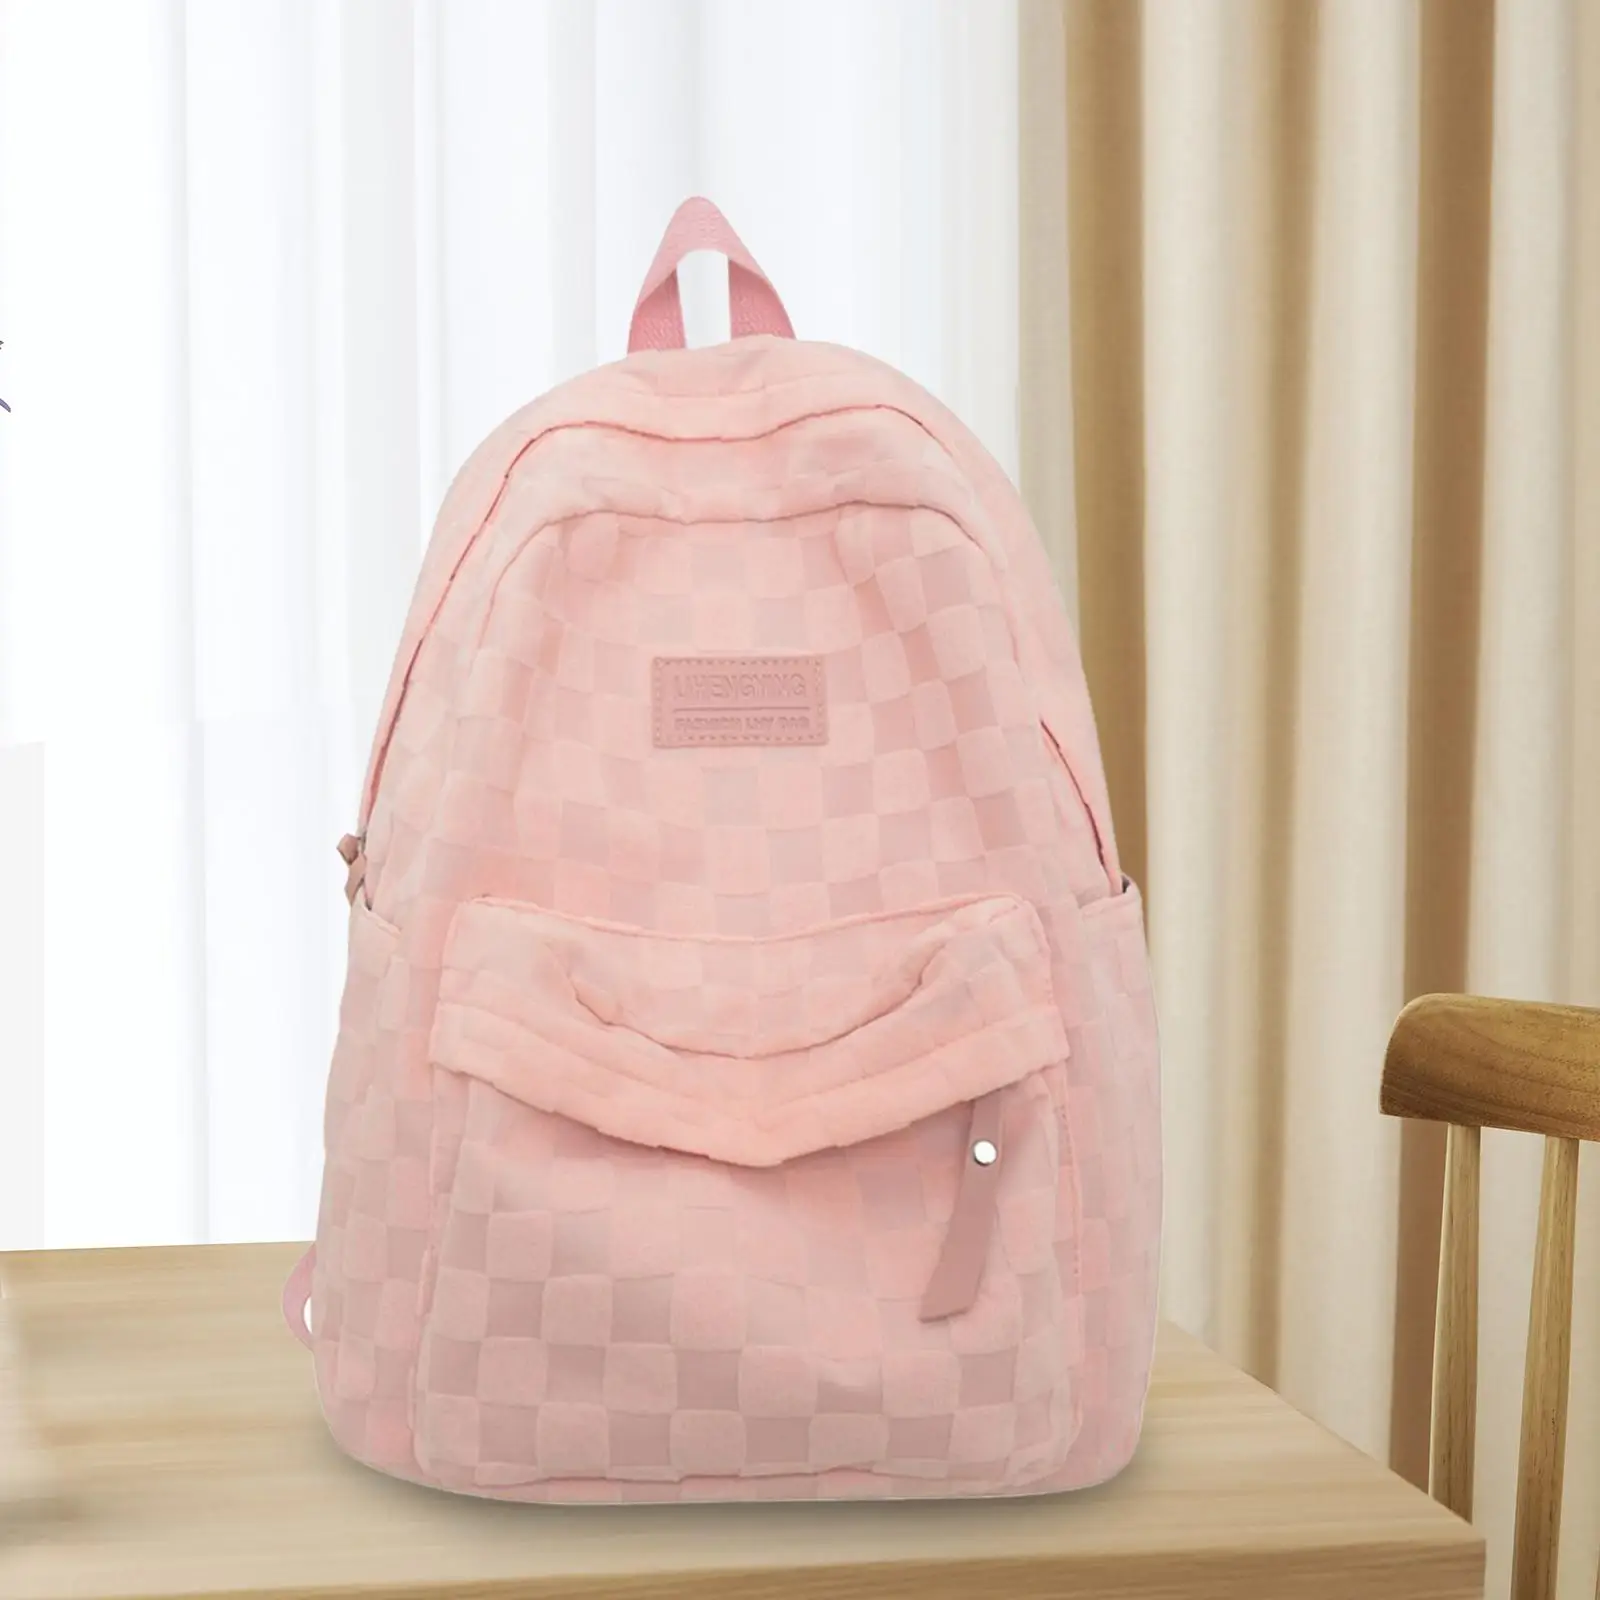 Girls Backpack Fashion Stylish with Adjustable Shoulder Straps Bookbag for Street Backpacking Indoor Outdoor Travel Shopping